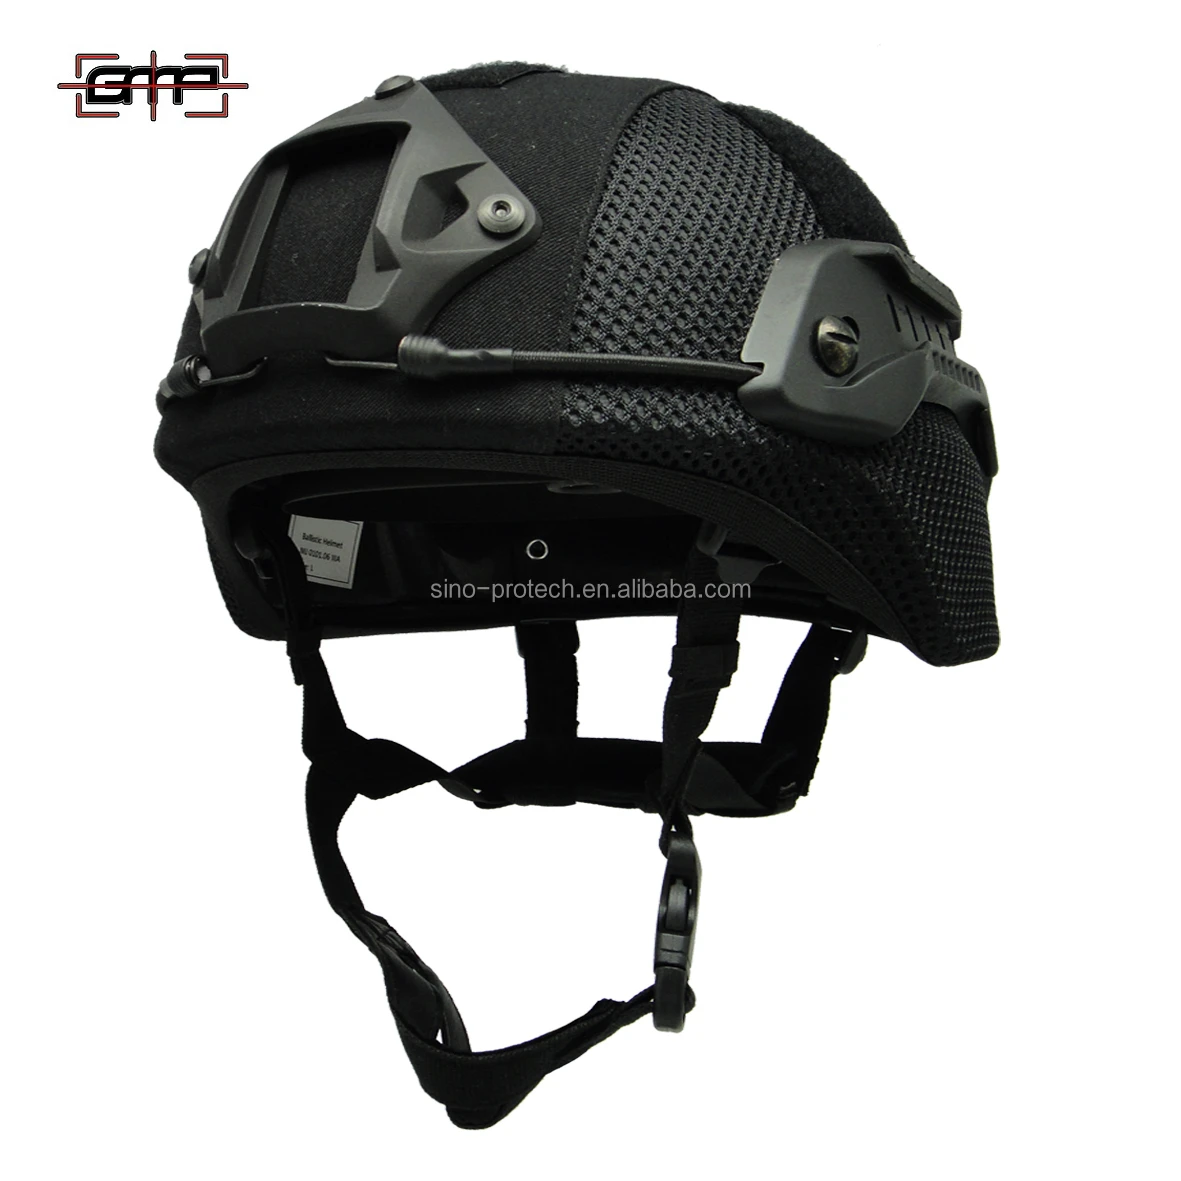 Zhongli aramid Bullet proof helmet /MICH bulletproof Ballistic Helmet